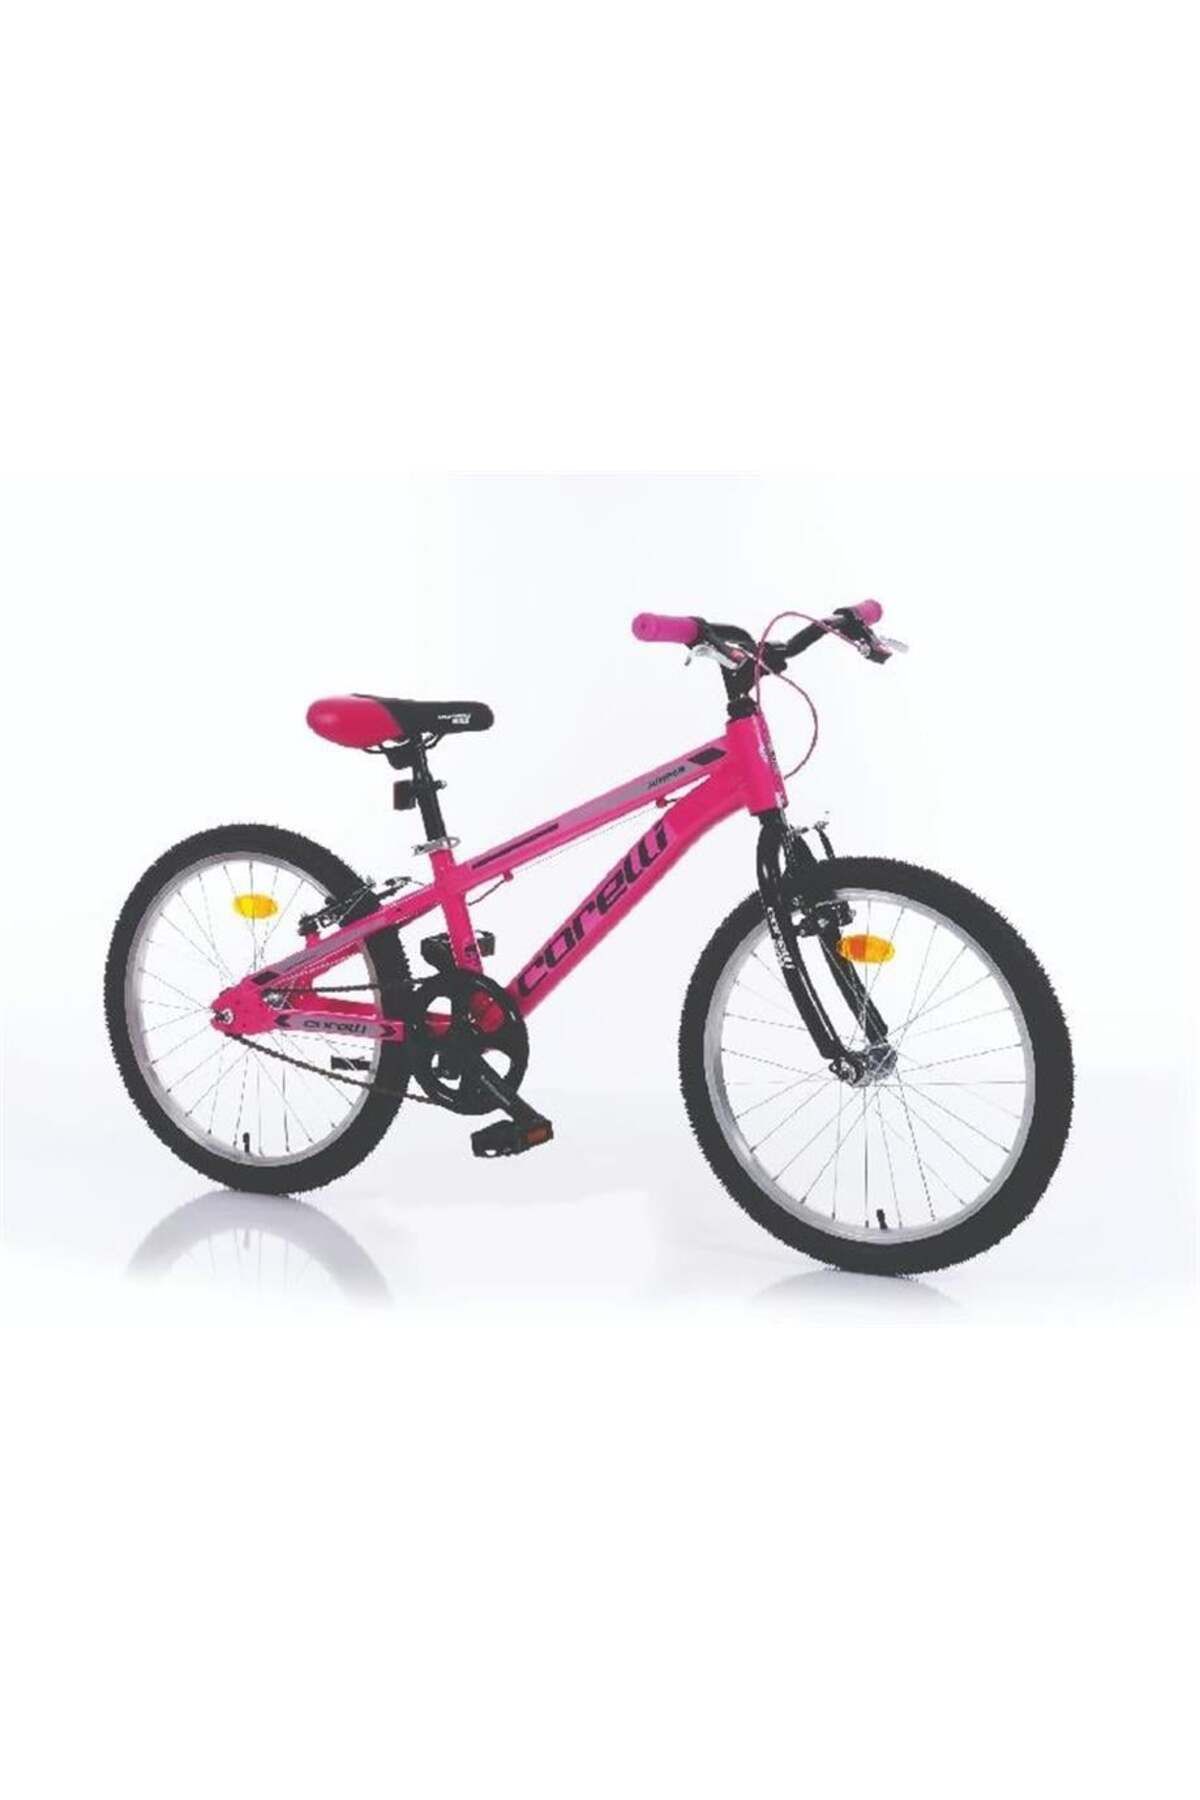 Corelli Jumper Kız Çocuk Bisikleti 36cm V 20 Jant Pembe Siyah Gri